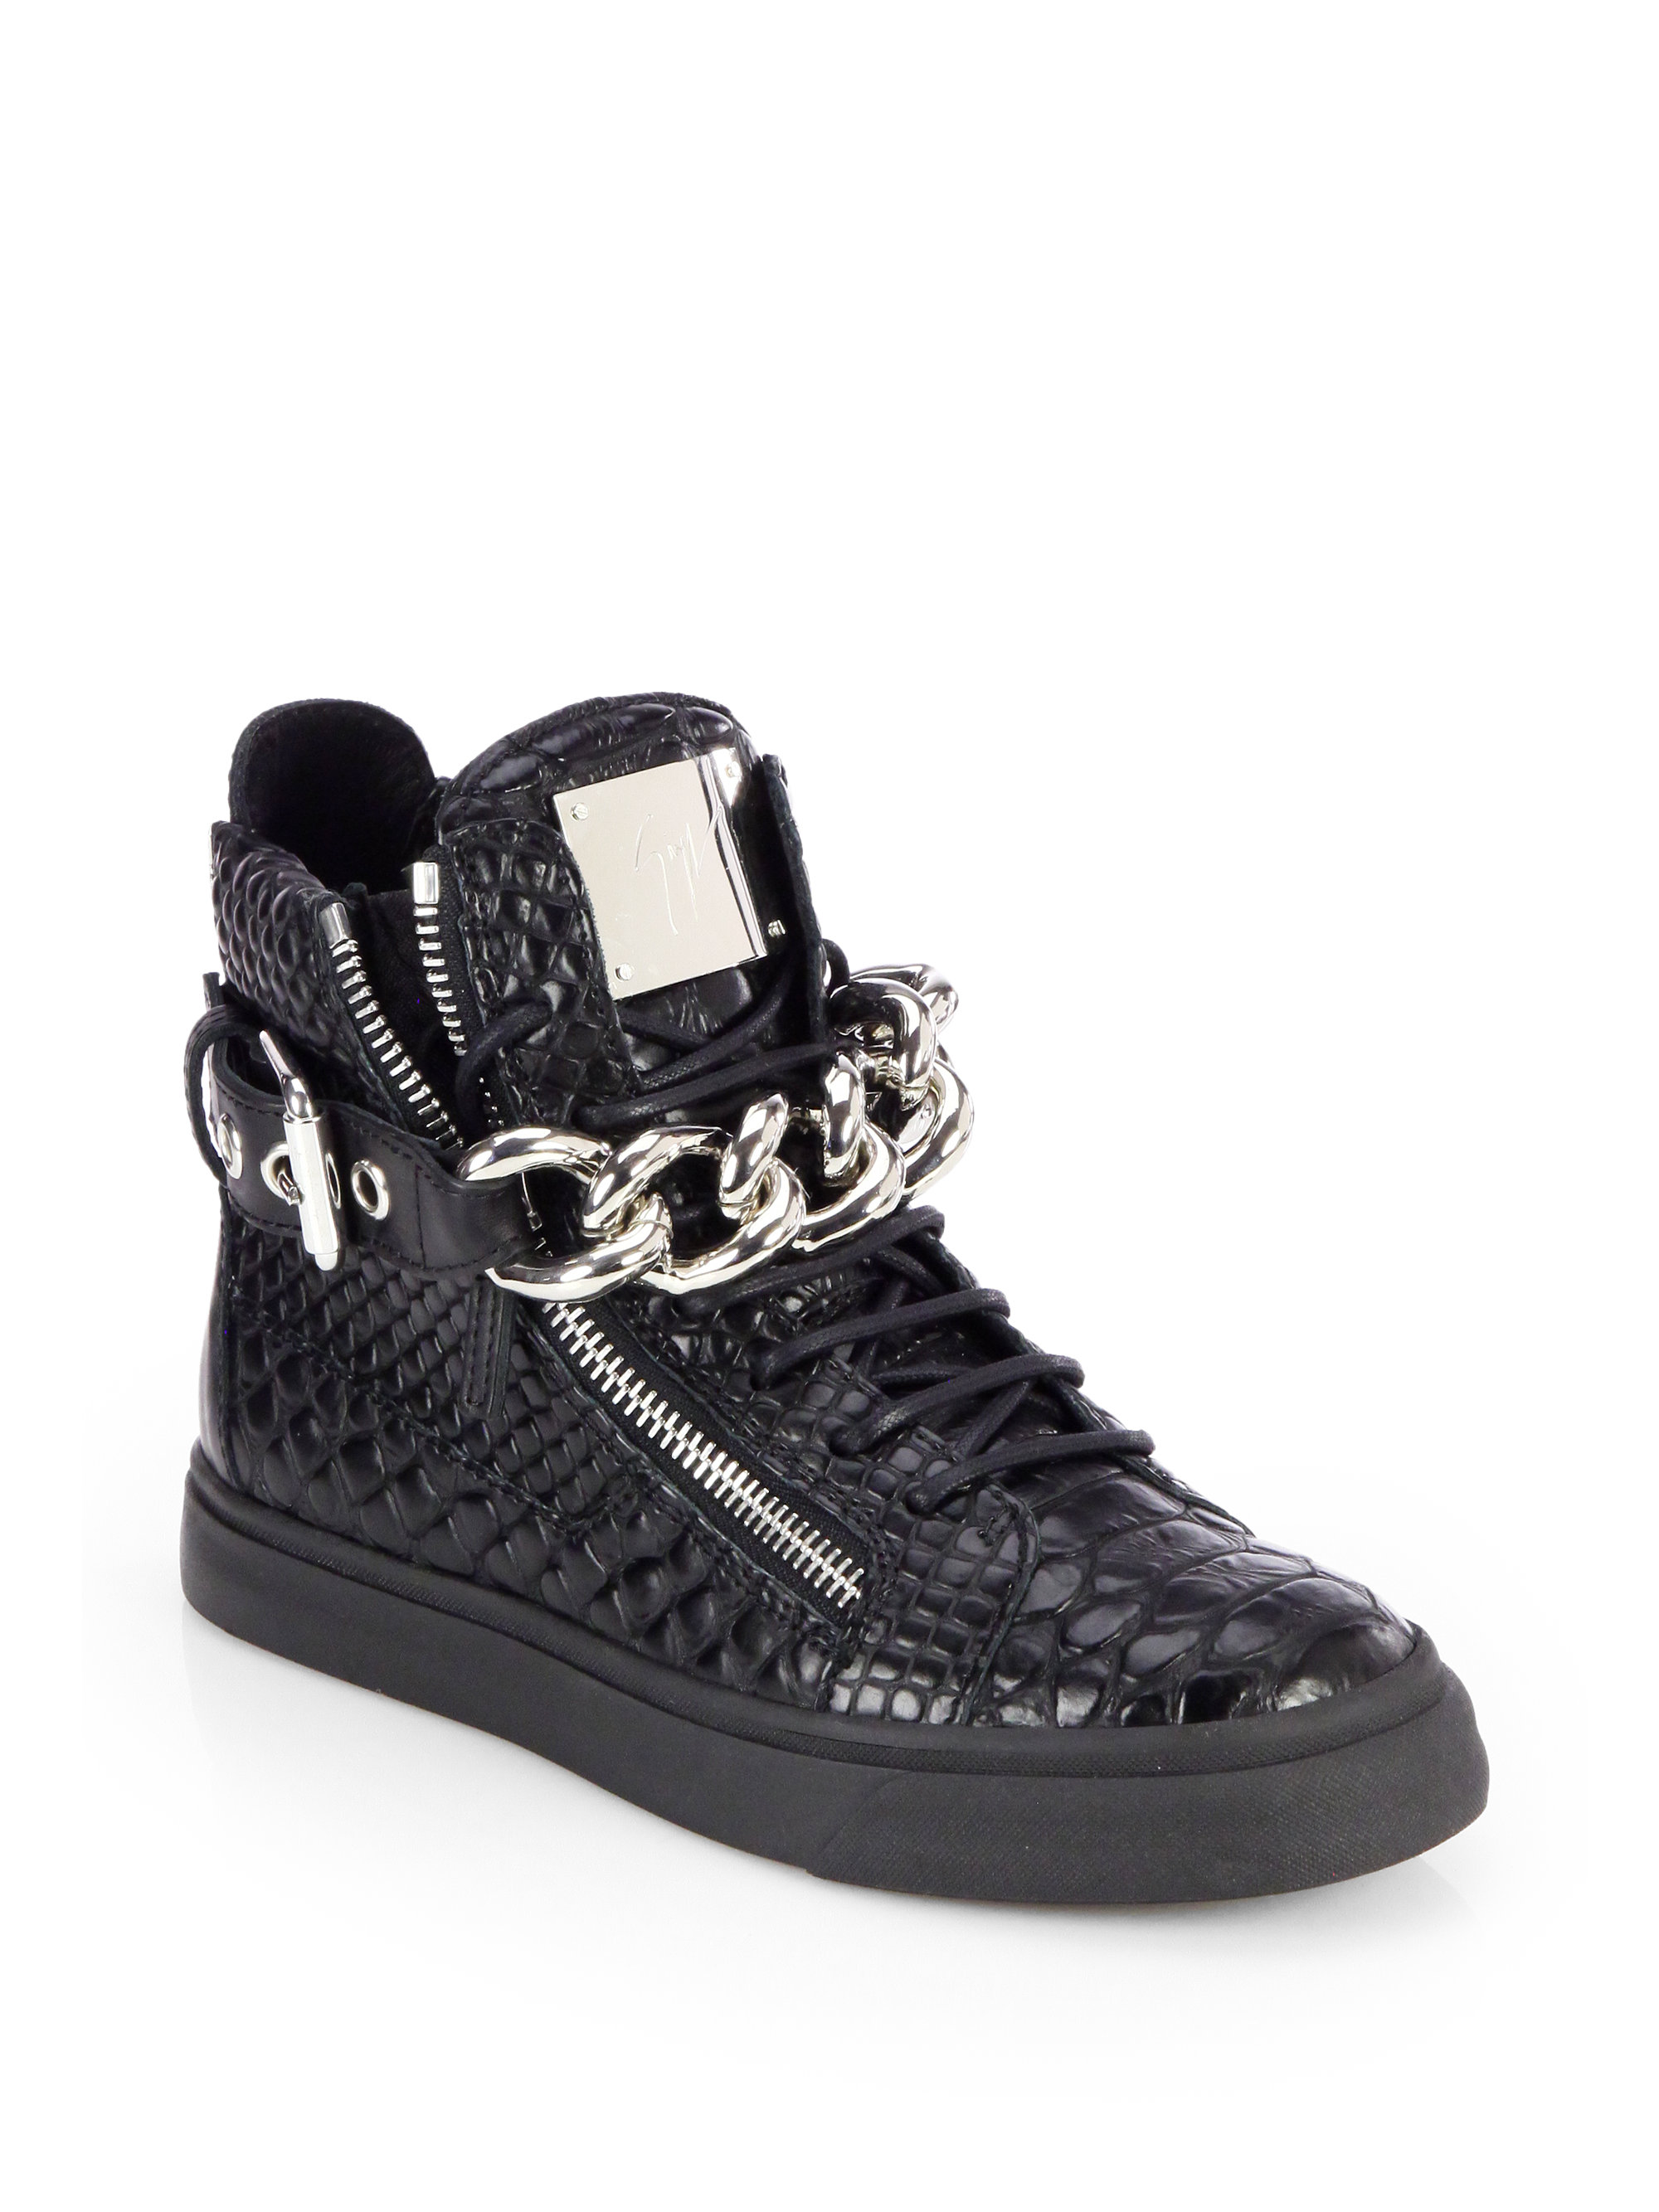 Giuseppe zanotti Crocodile embossed Leather Hightop Sneakers in Black ...